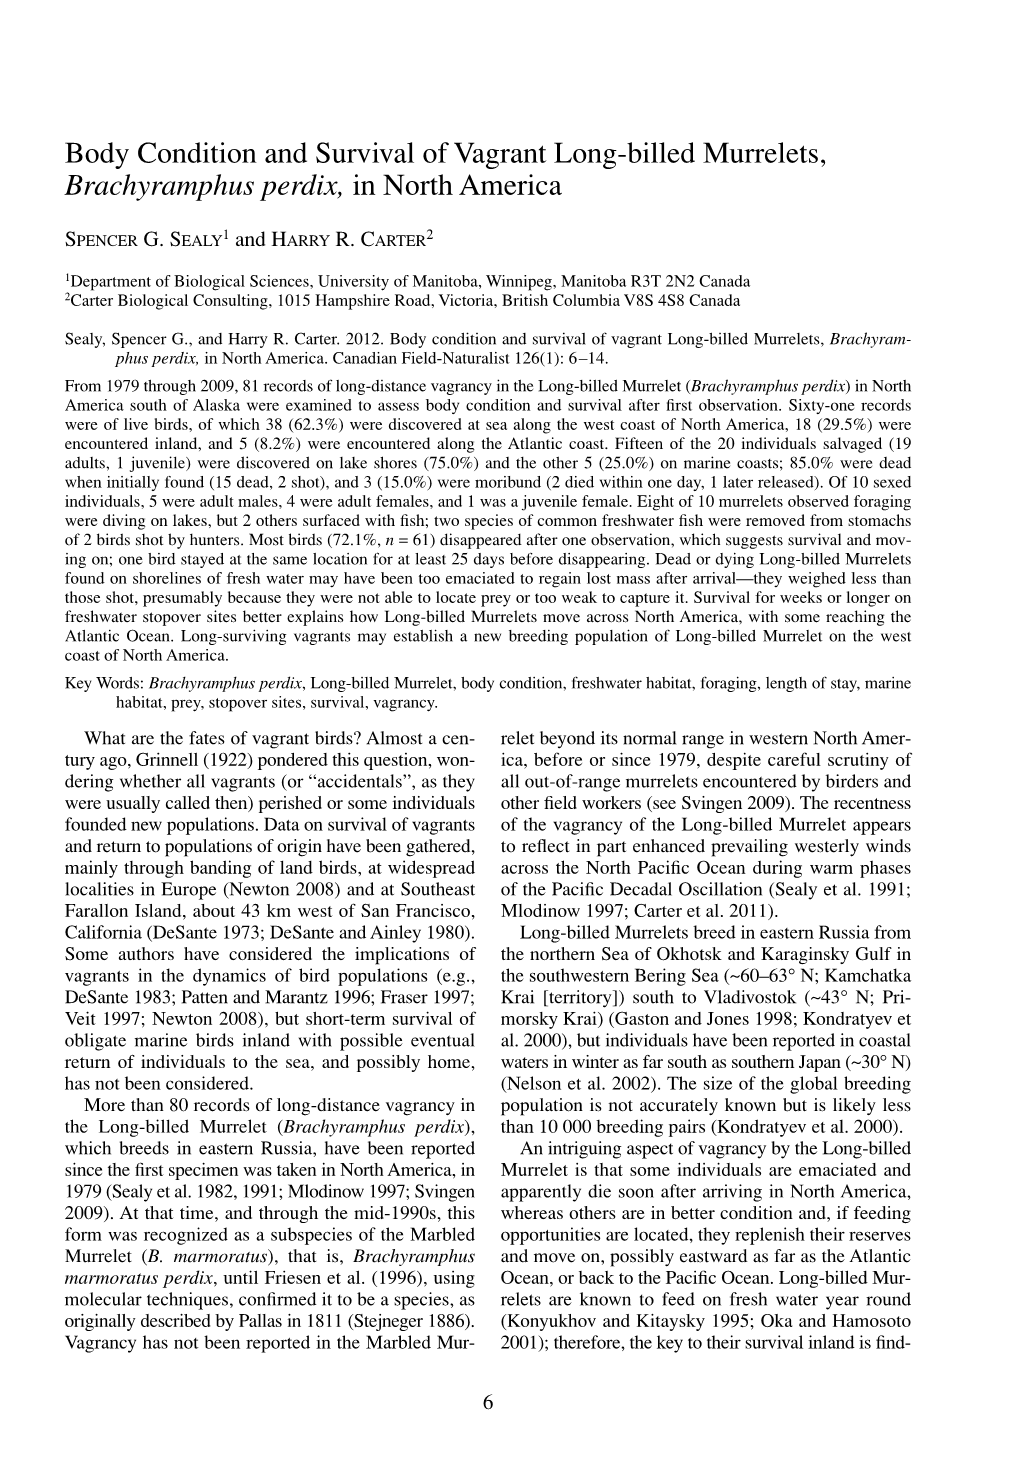 Body Condition and Survival of Vagrant Long-Billed Murrelets, Brachyramphus Perdix, in North America